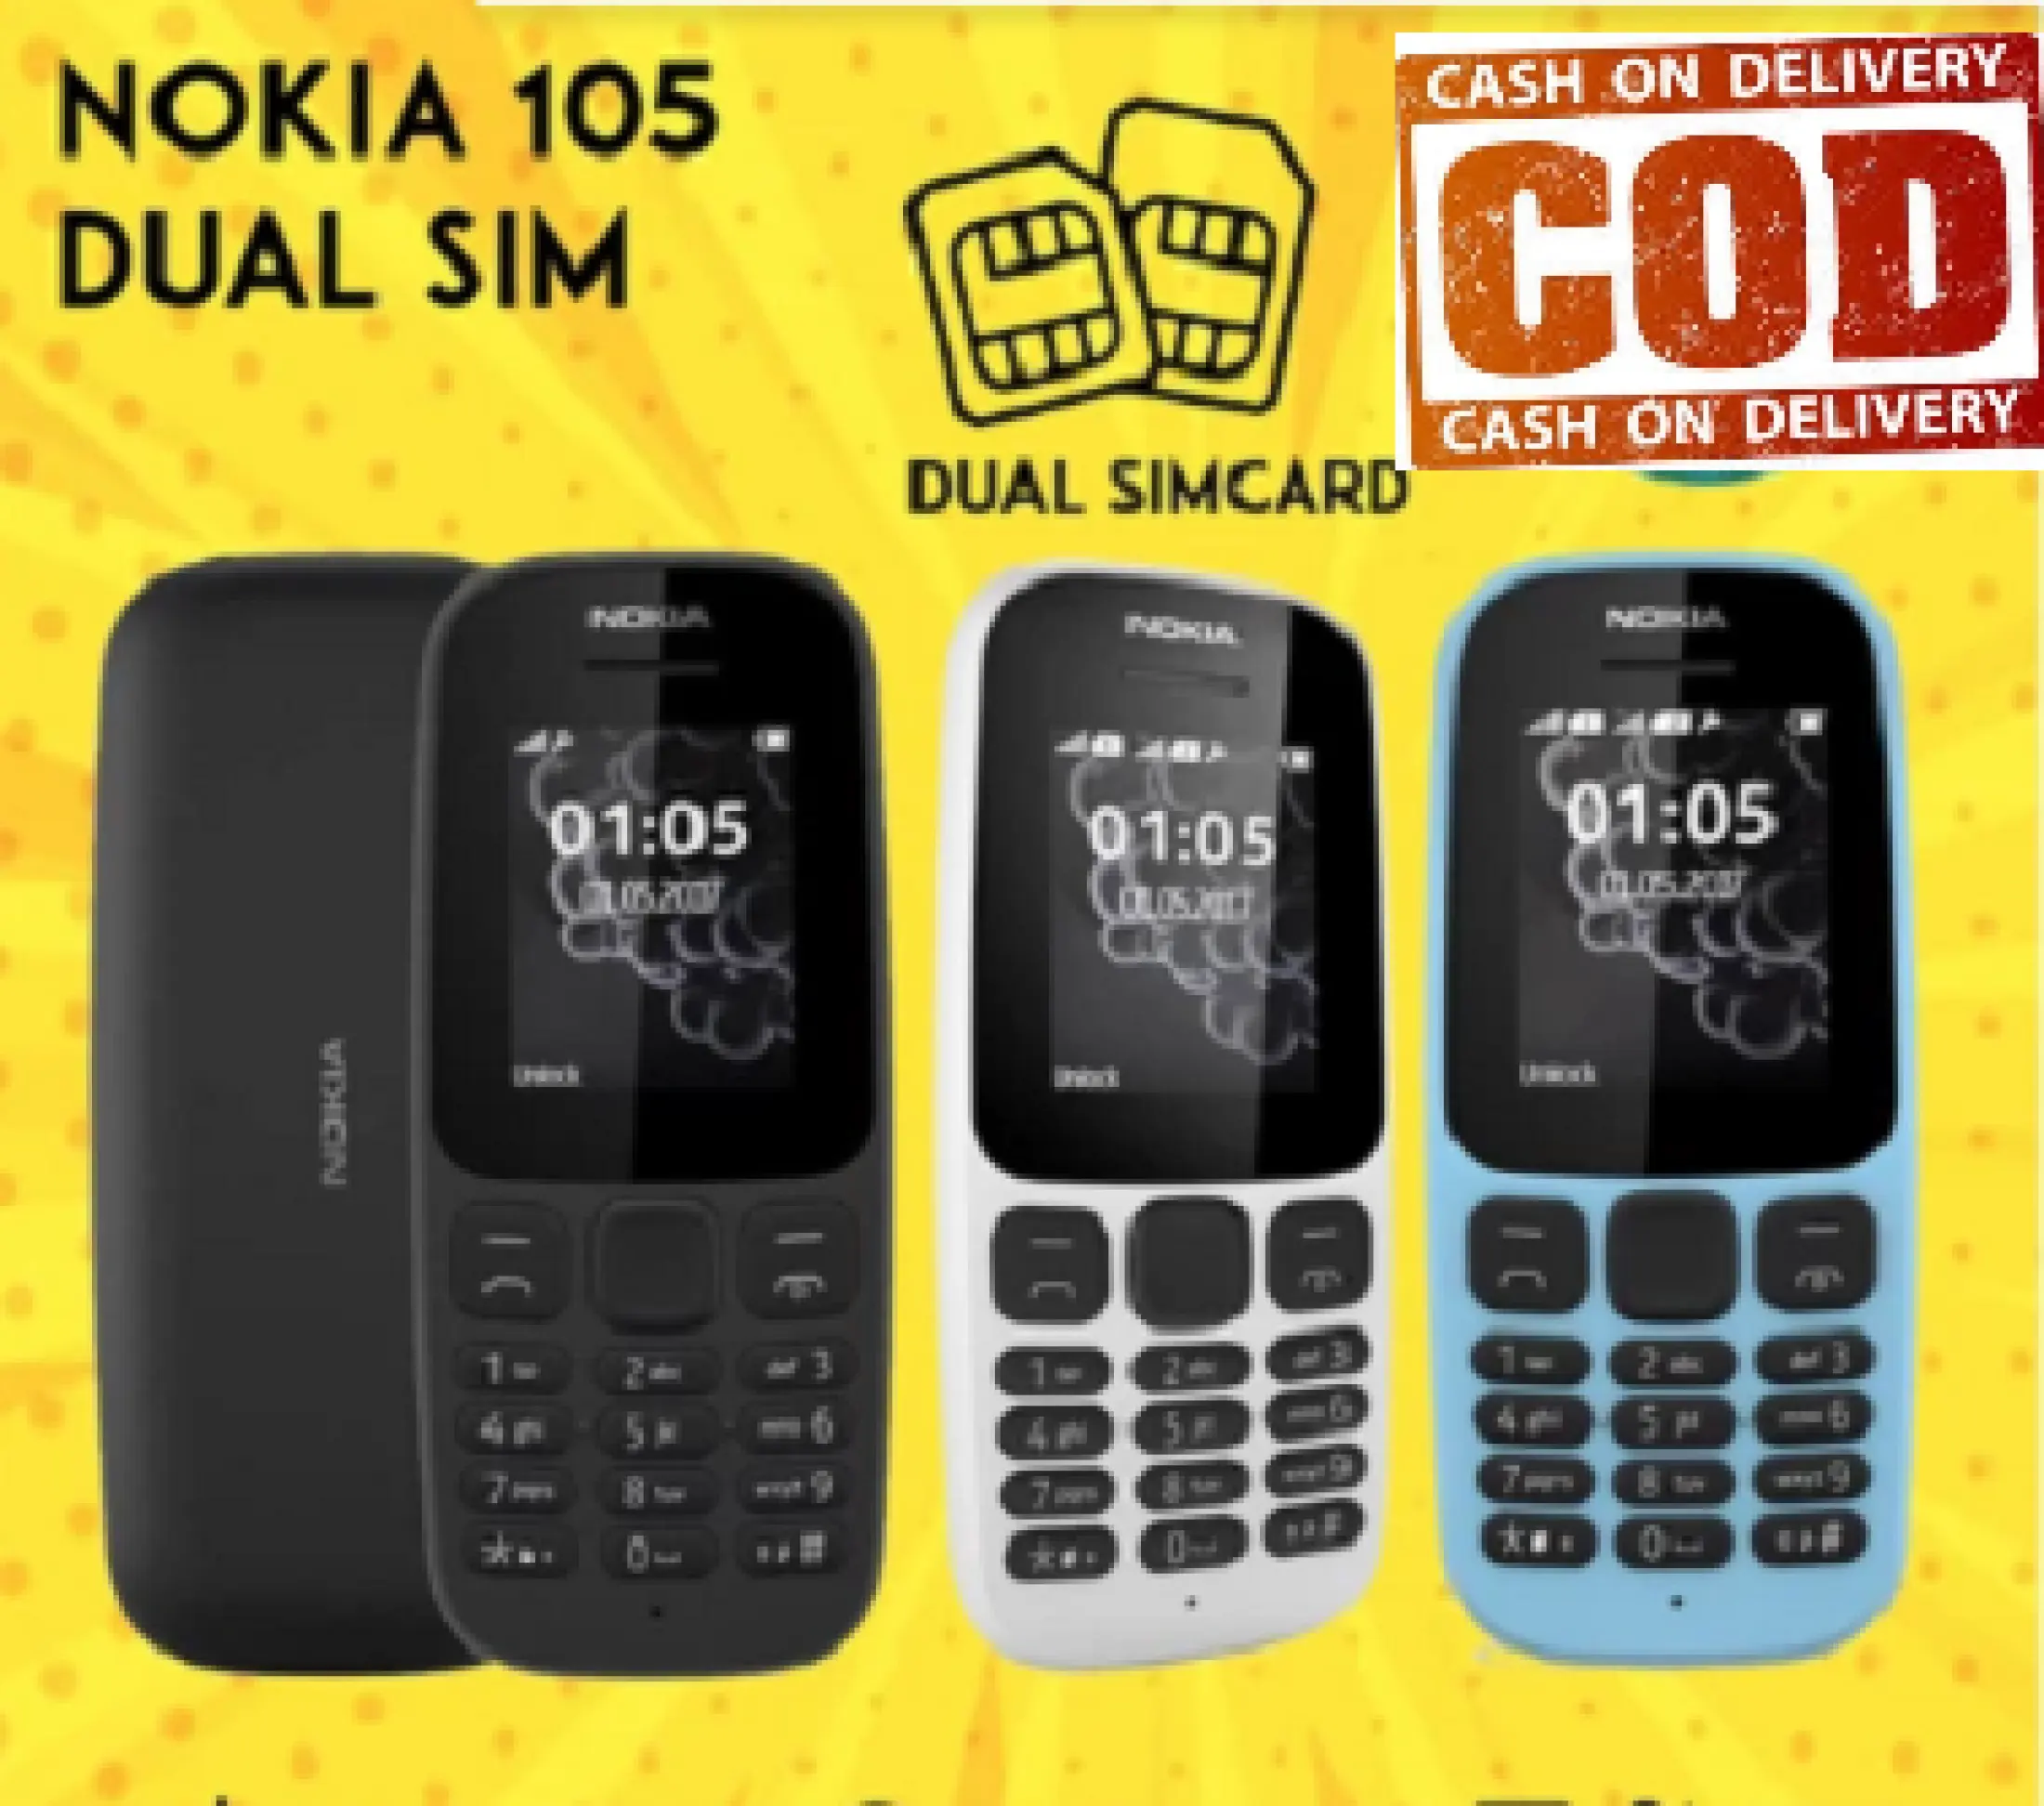 Adking Cod Promo Harga Terrmurah New Nokia 105 Dual Sim Garansi Lazada Indonesia